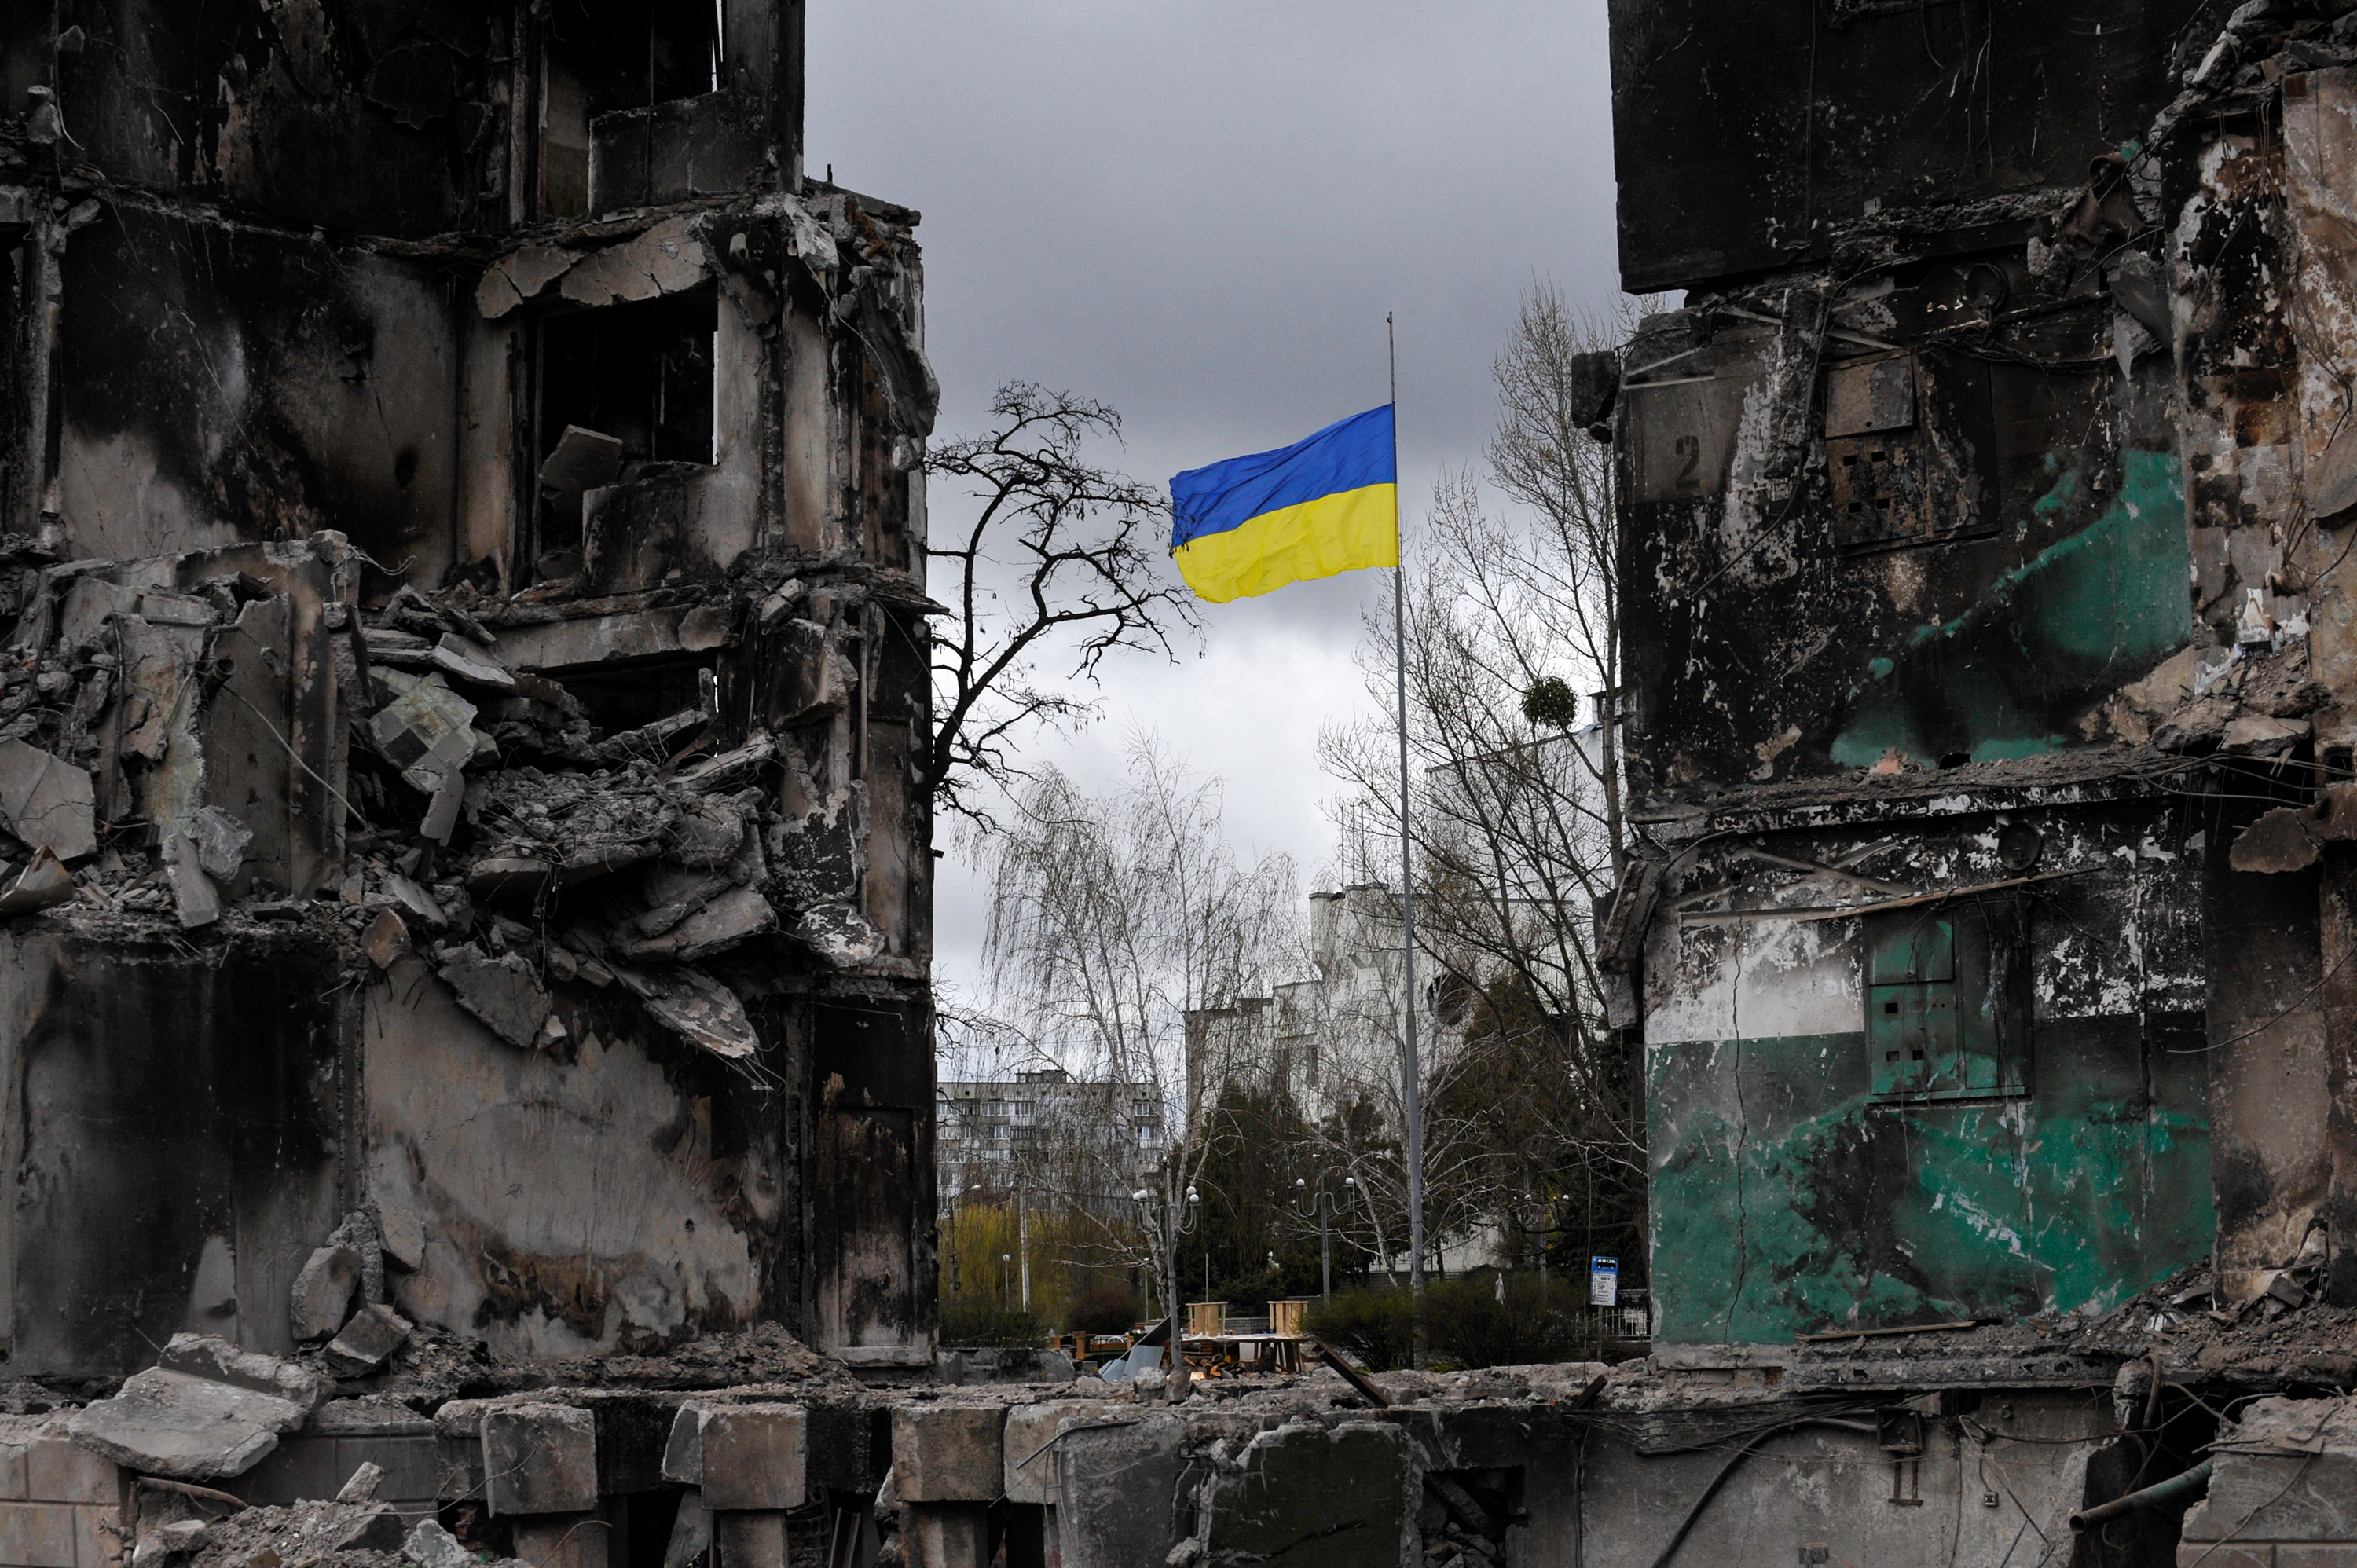 A Ukrainian flag flies amongst destruction in Borodianka, Ukraine, on April 17.